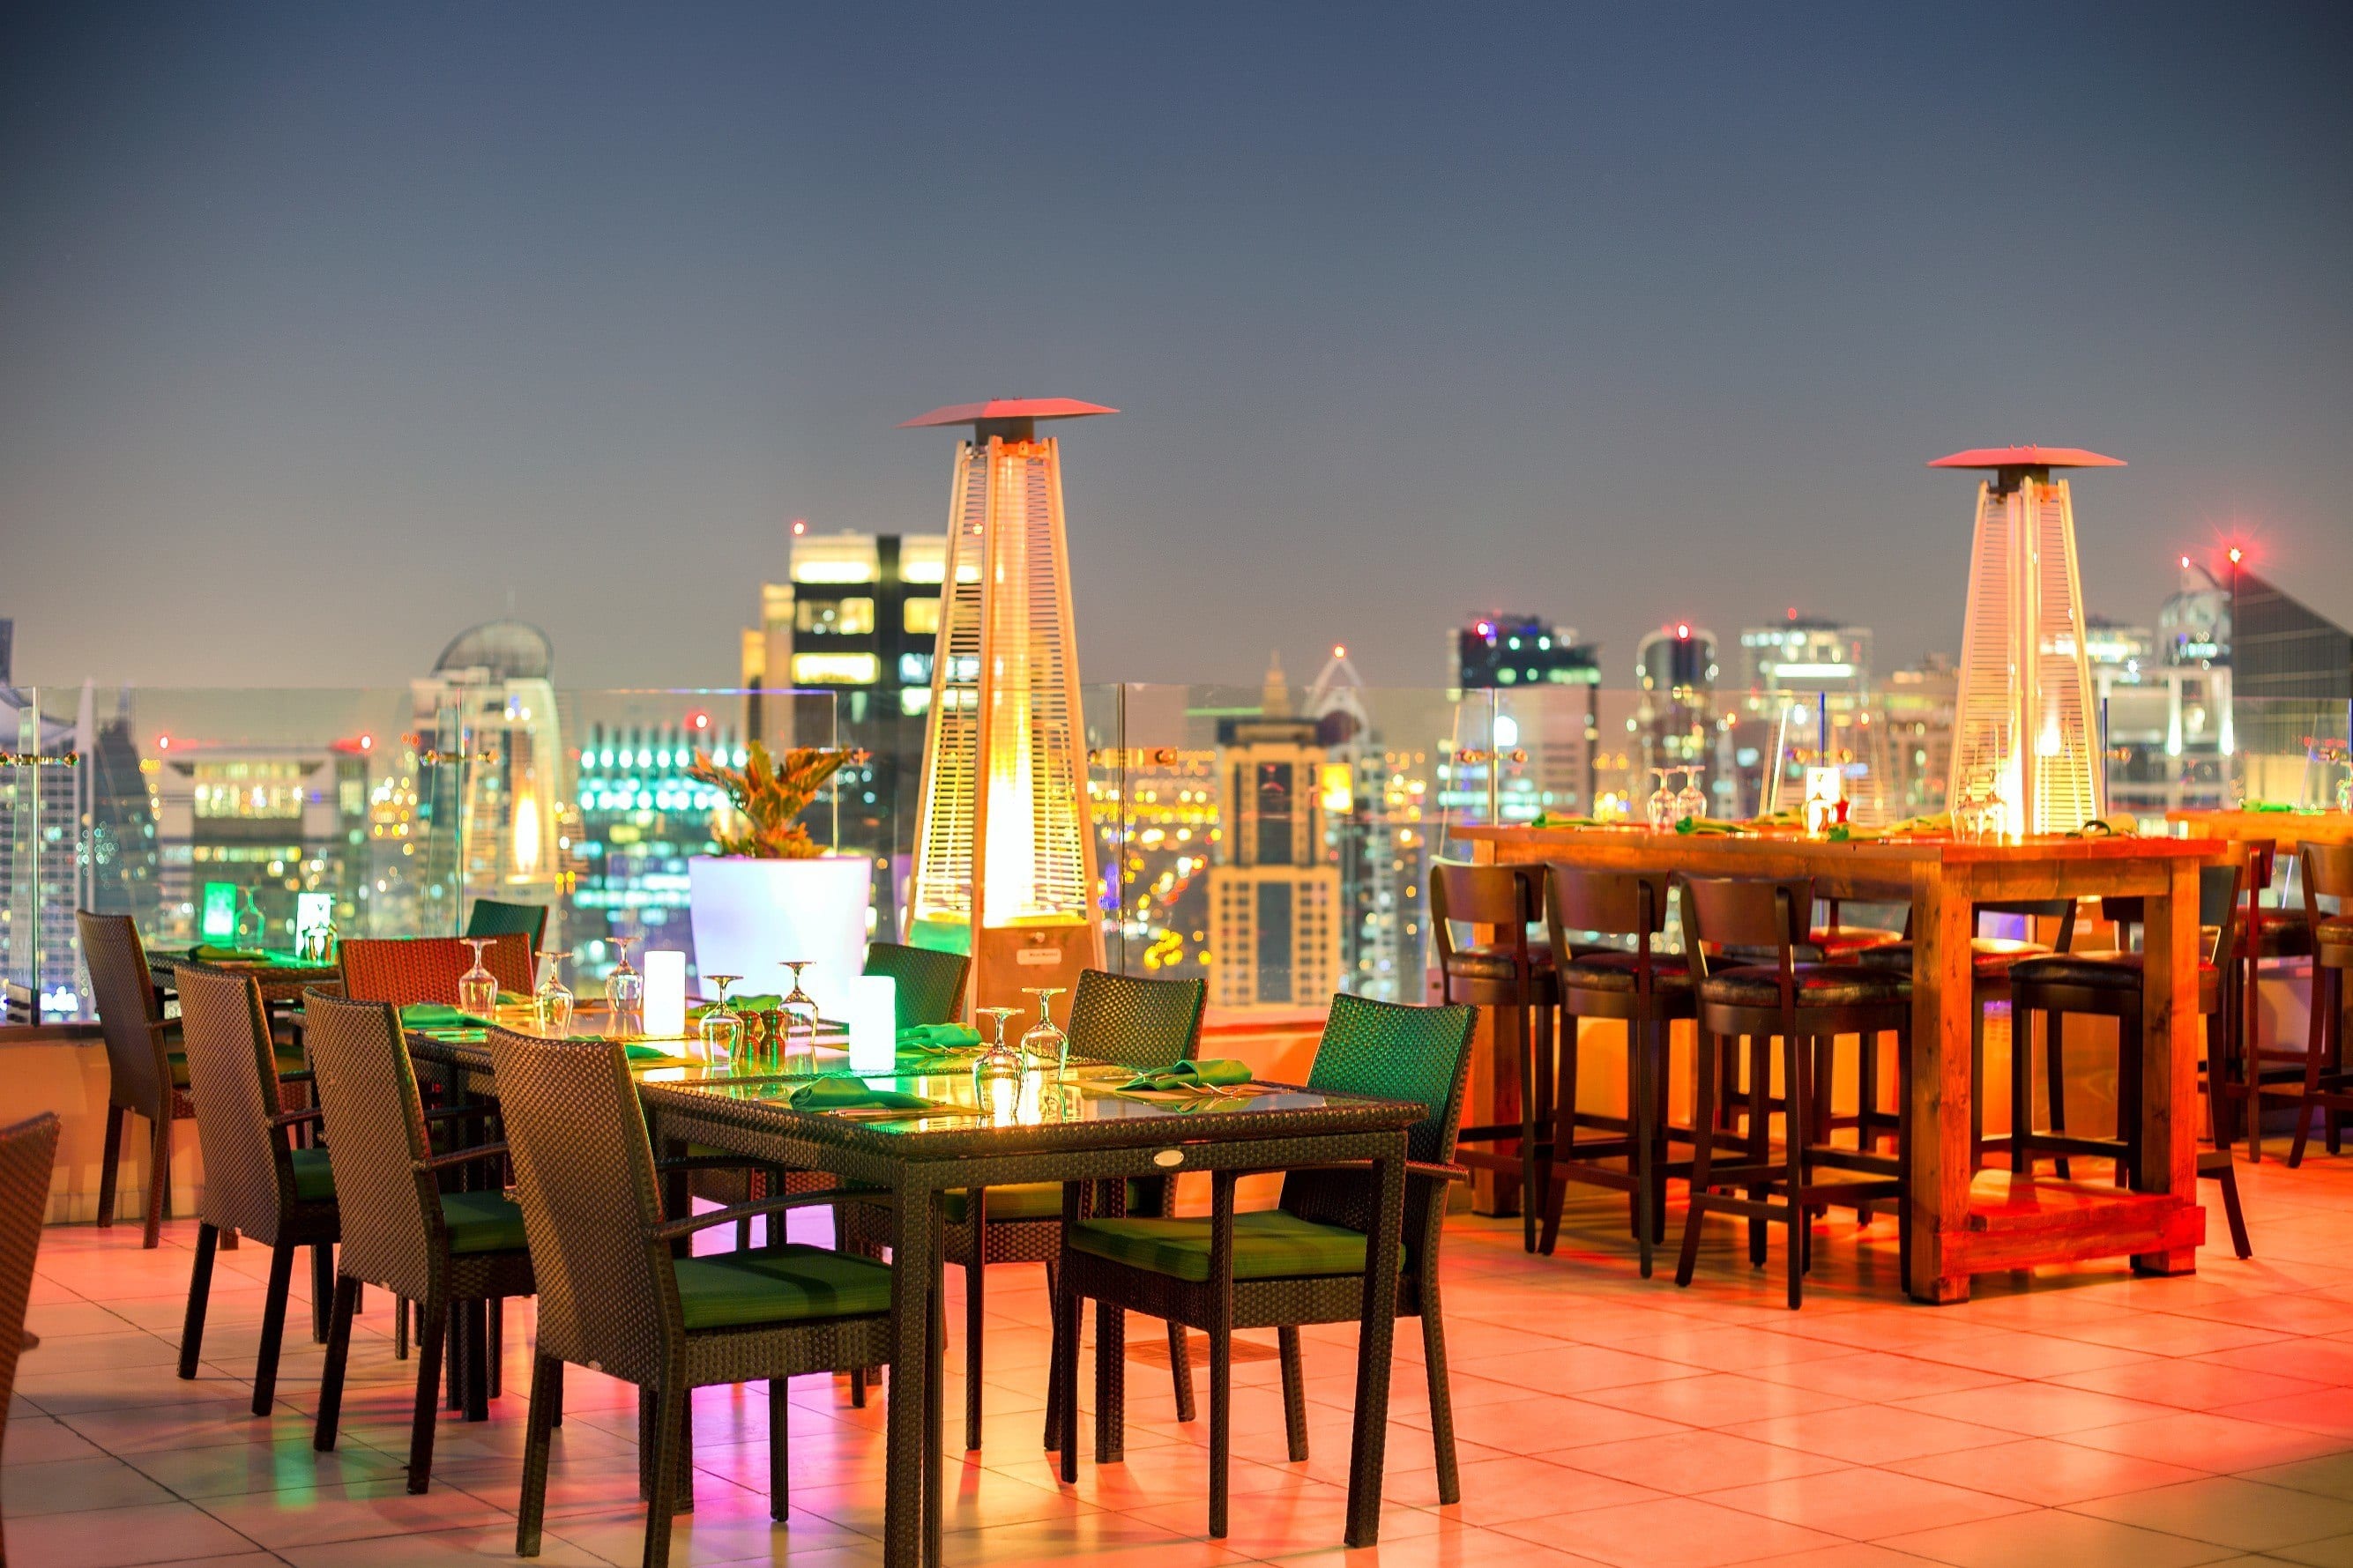 Fogueira Restaurant &amp; Lounge - Delta Hotels by Marriott, Jumeirah Beach Residence (JBR), Dubai | Zomato 